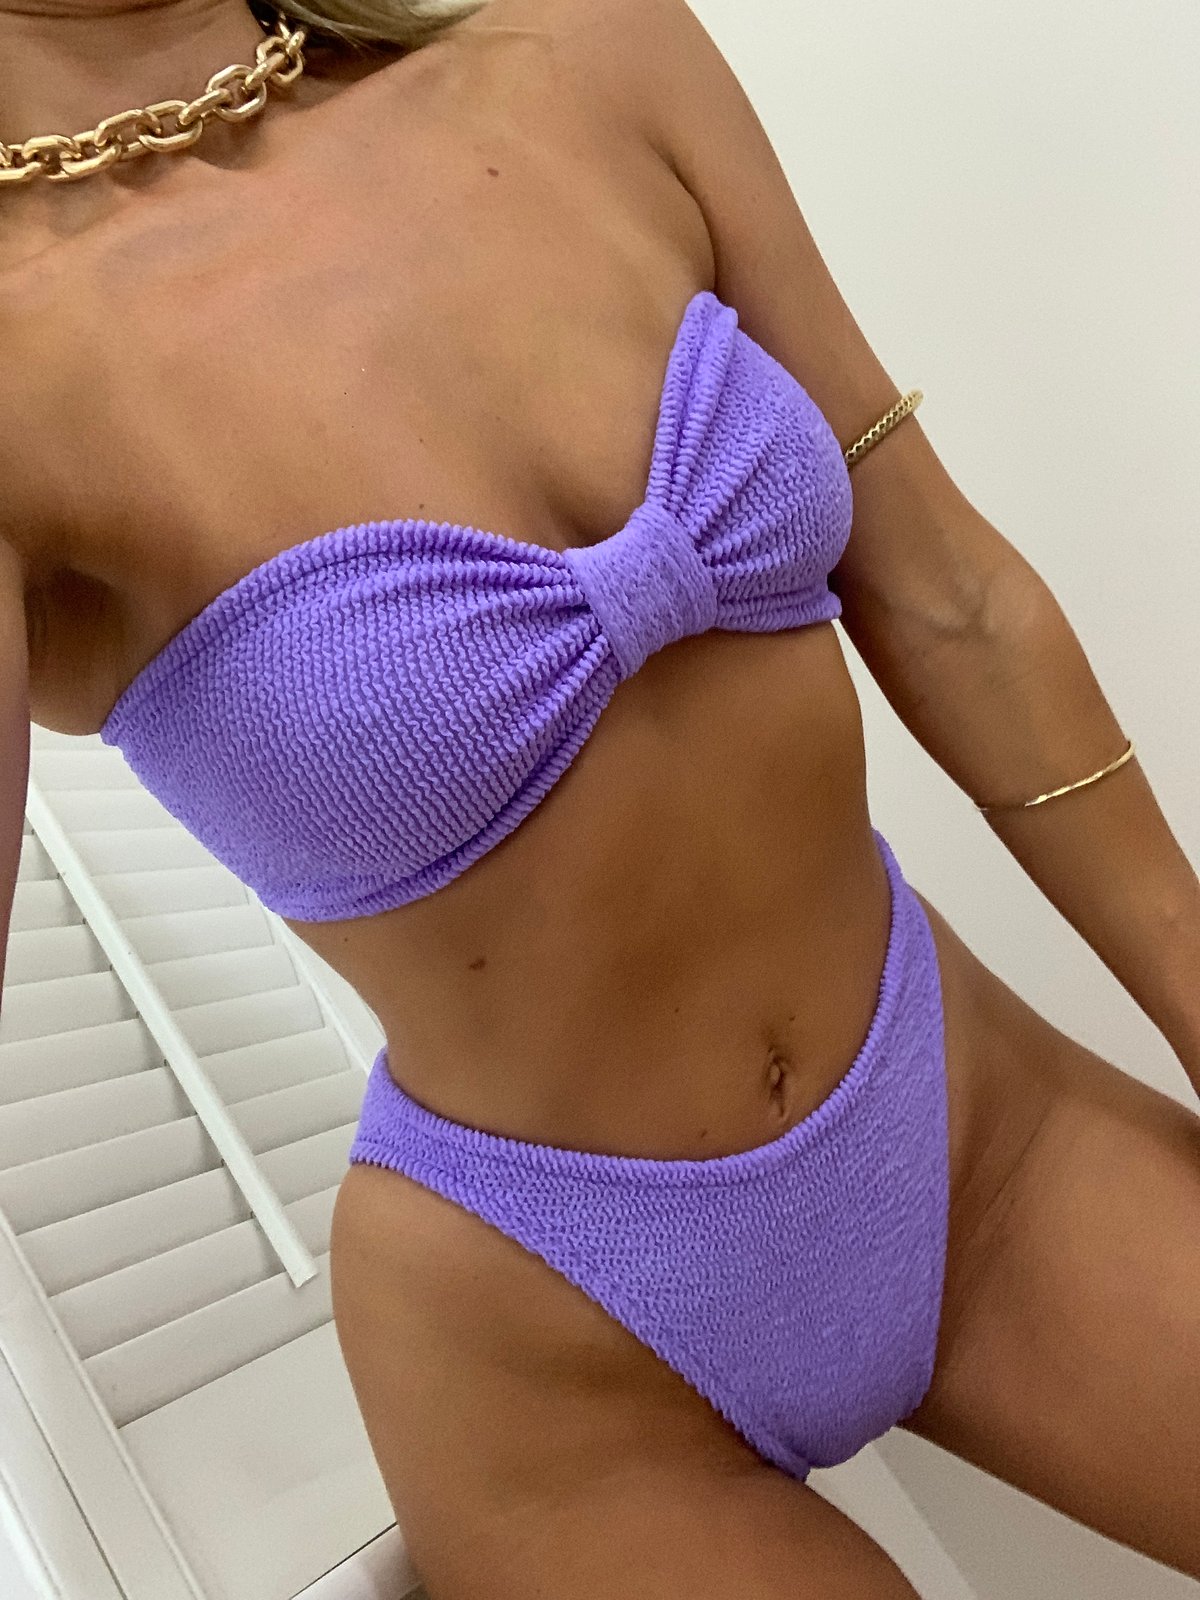 Velvety lilac string bikini bottom, Quintsoul